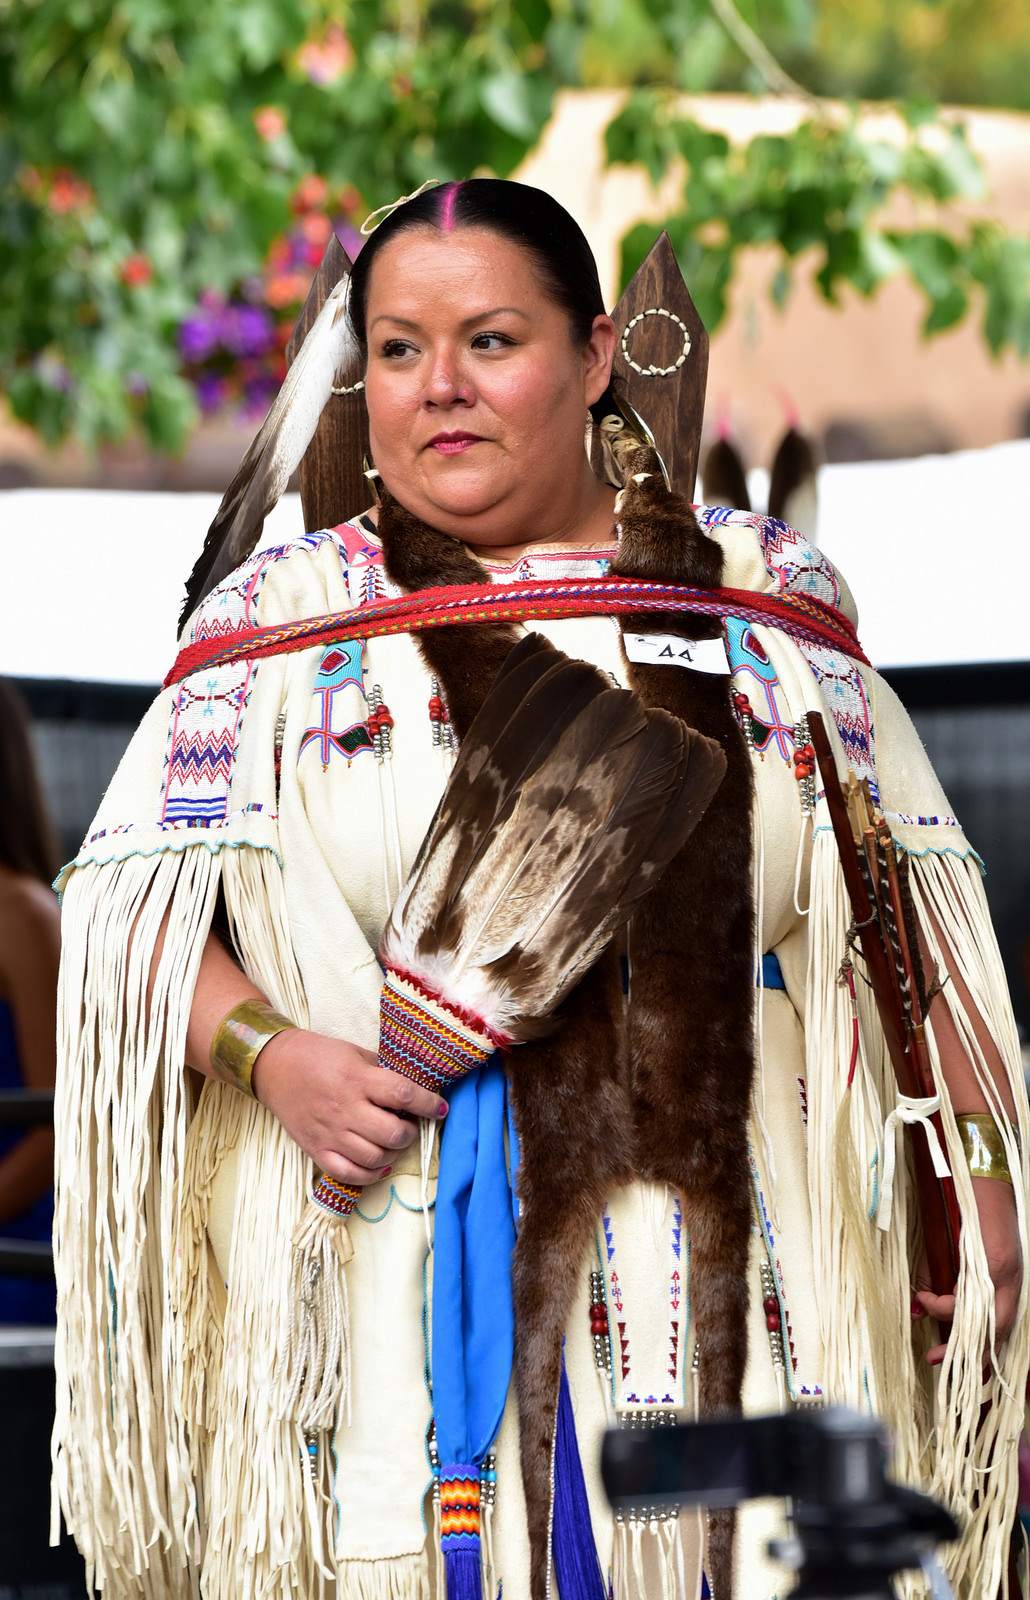 native american clothing9 Native American Clothing Contest at Santa Fe Indian Market